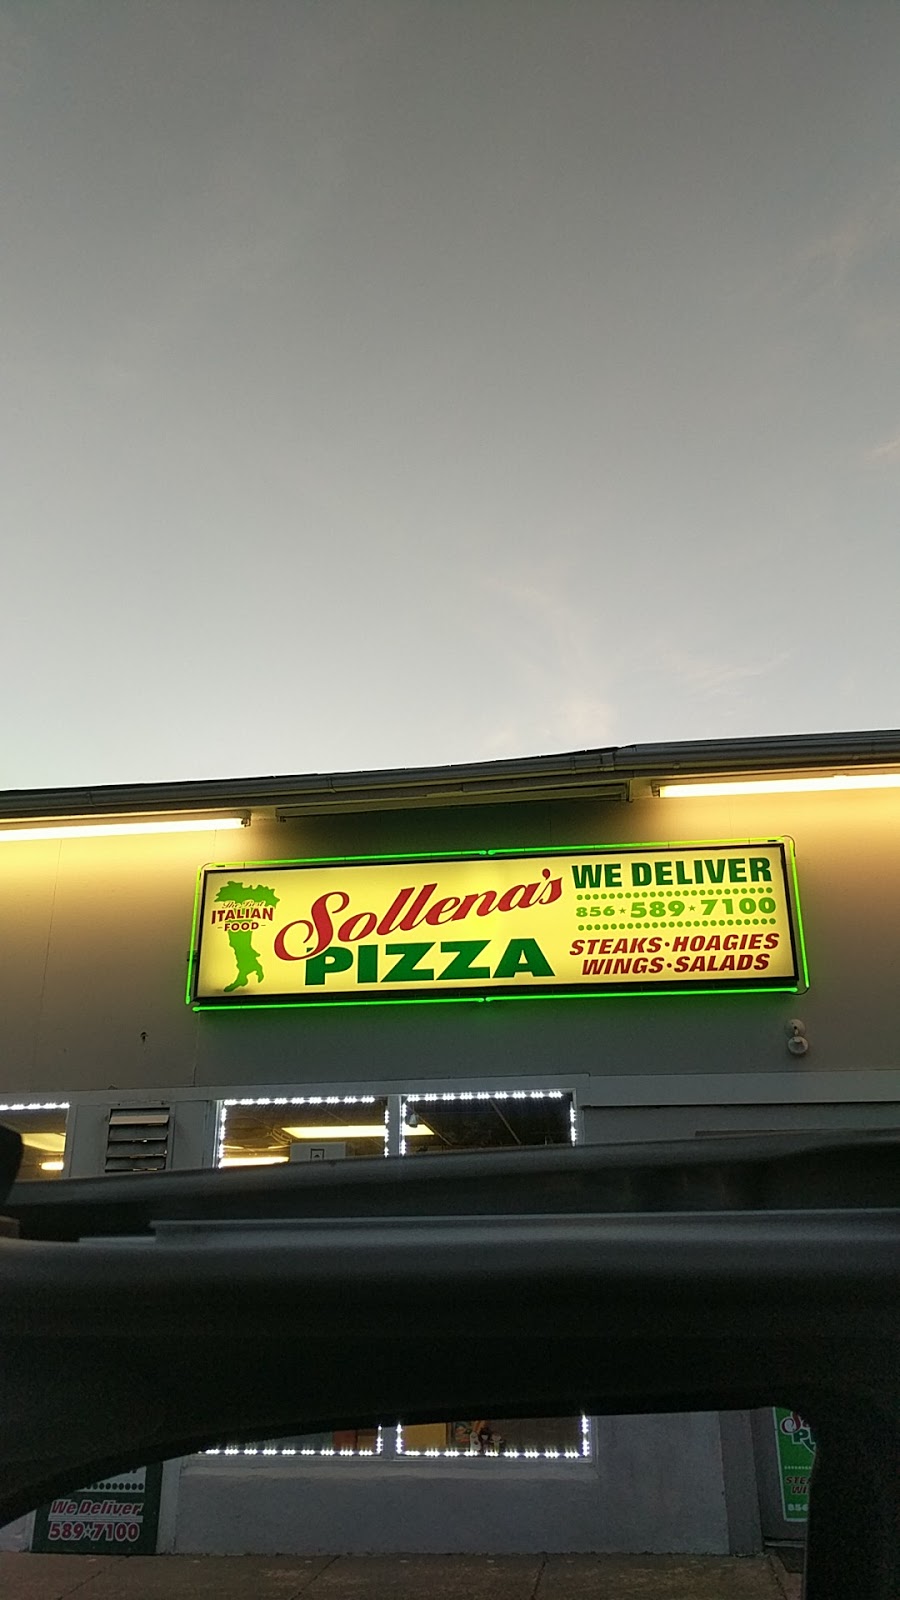 Sollenas Pizza | 291 Delsea Dr, Sewell, NJ 08080 | Phone: (856) 589-7100